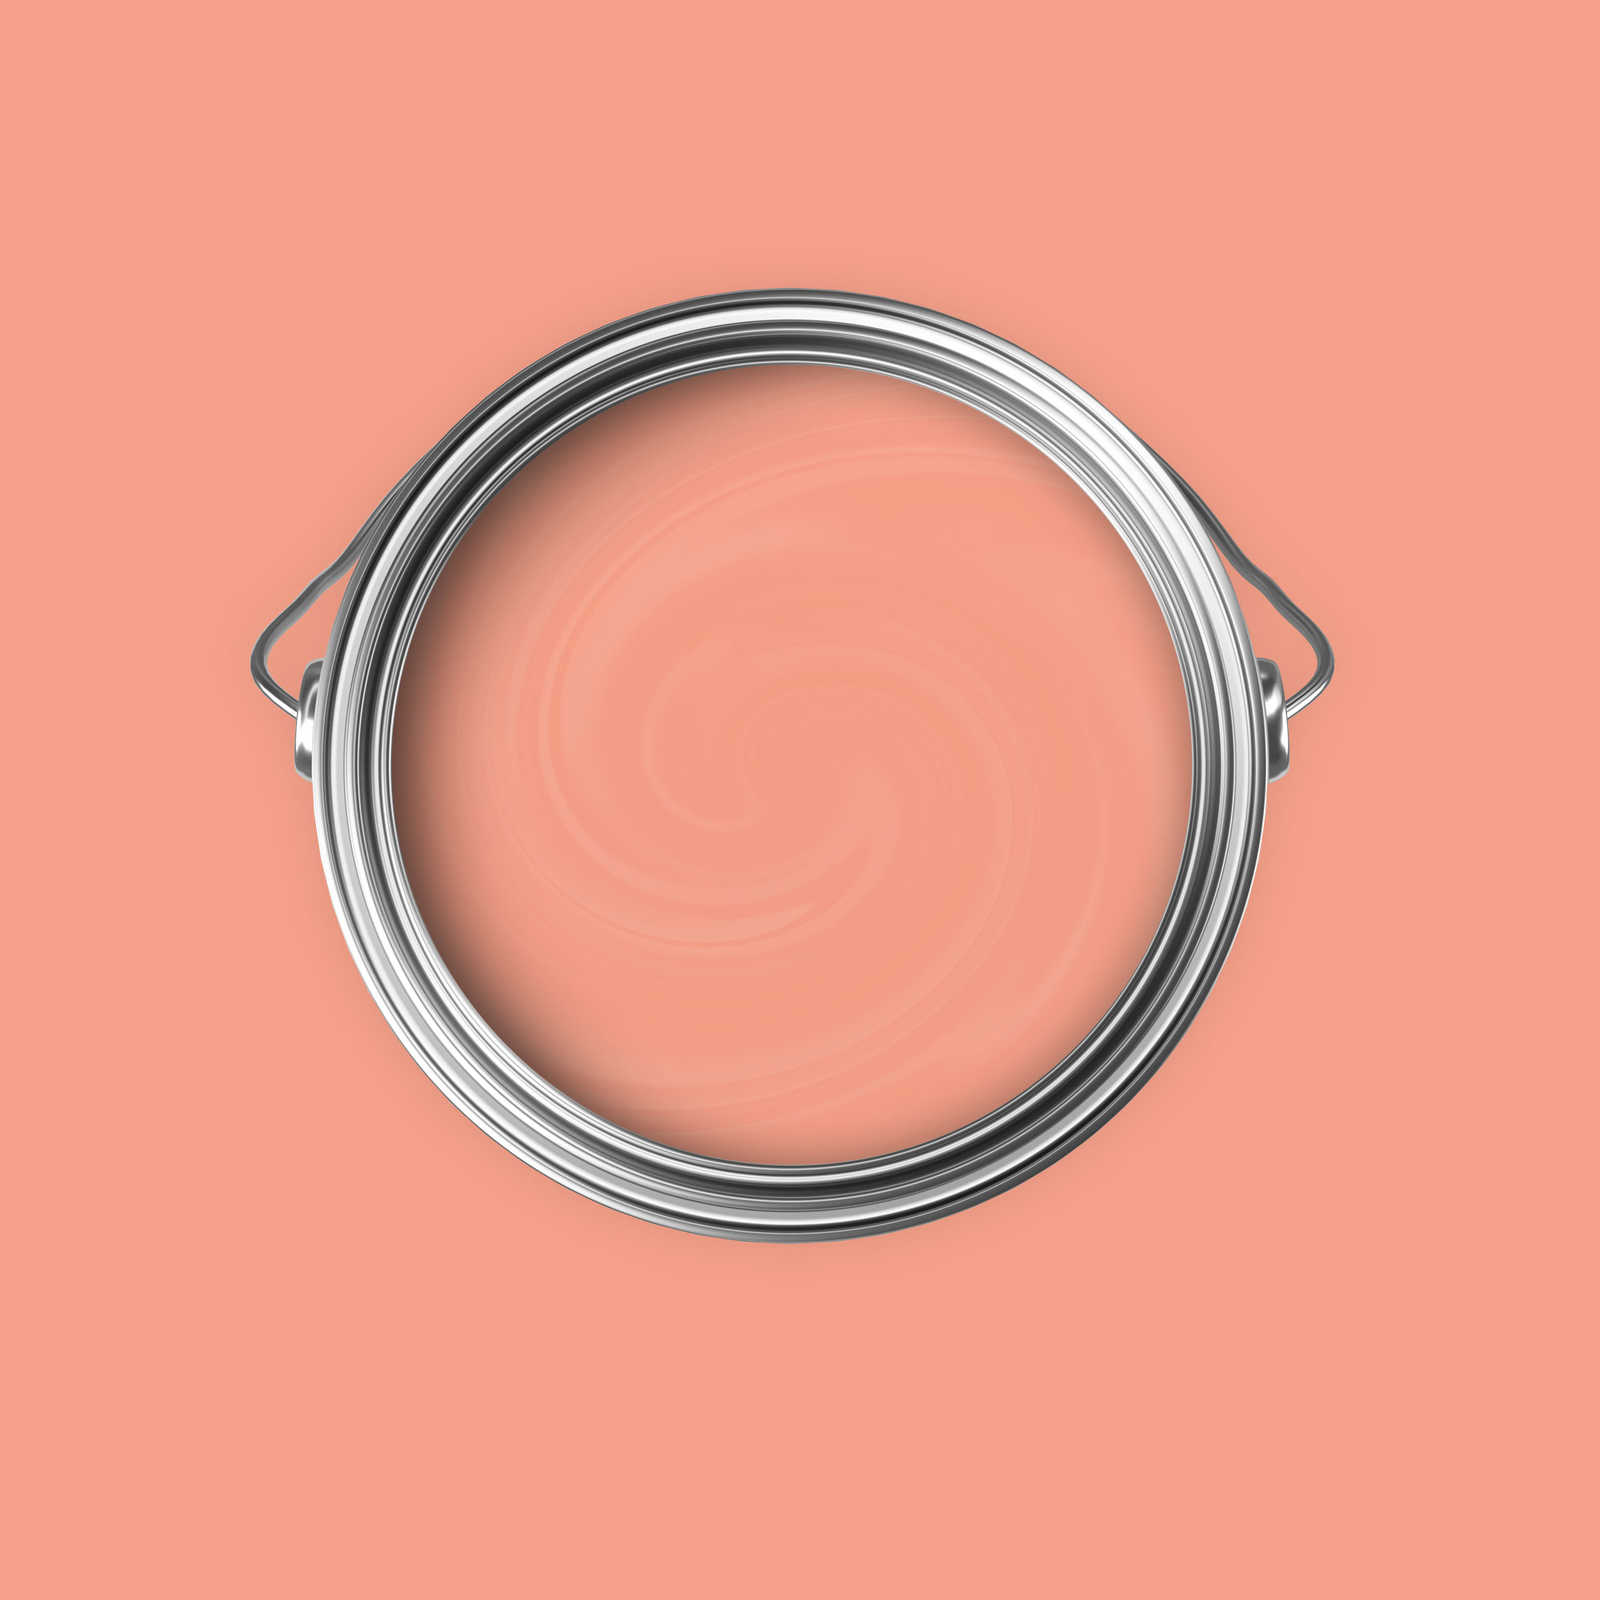             Pittura murale Premium Harmonious Salmon »Active Apricot« NW914 – 5 litri
        